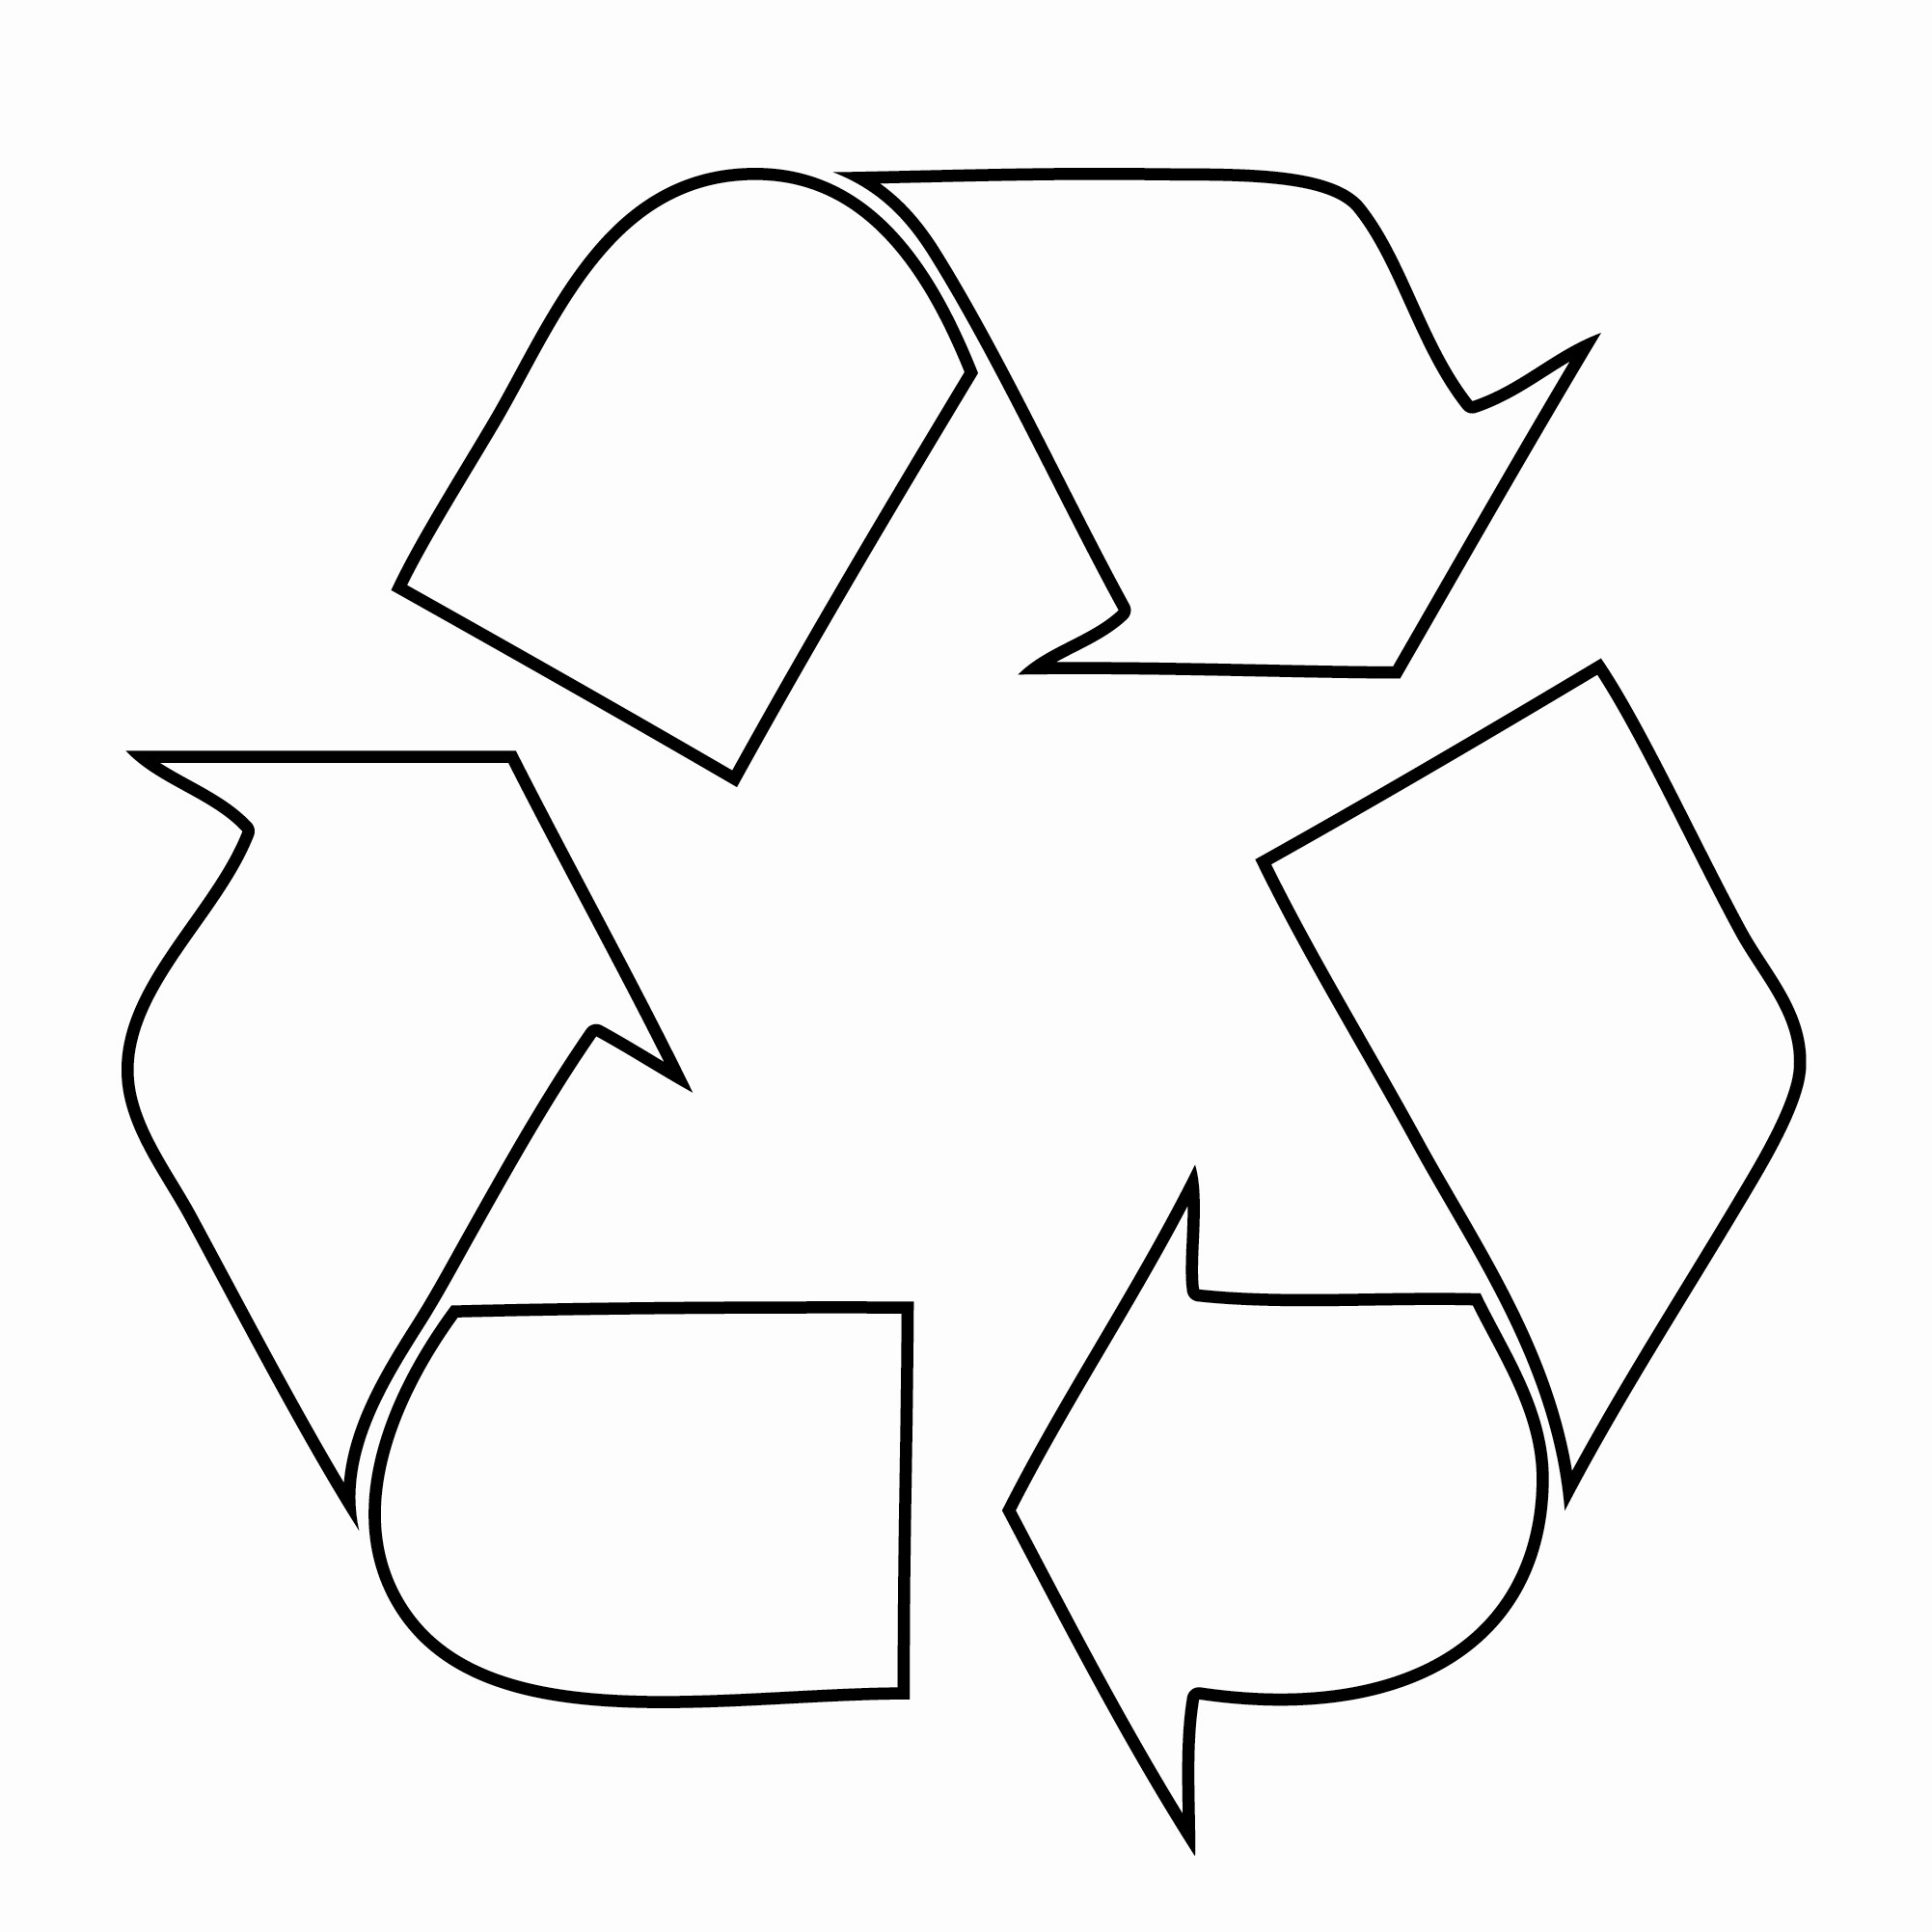 Oakleaf Zero Waste Recycling Symbols